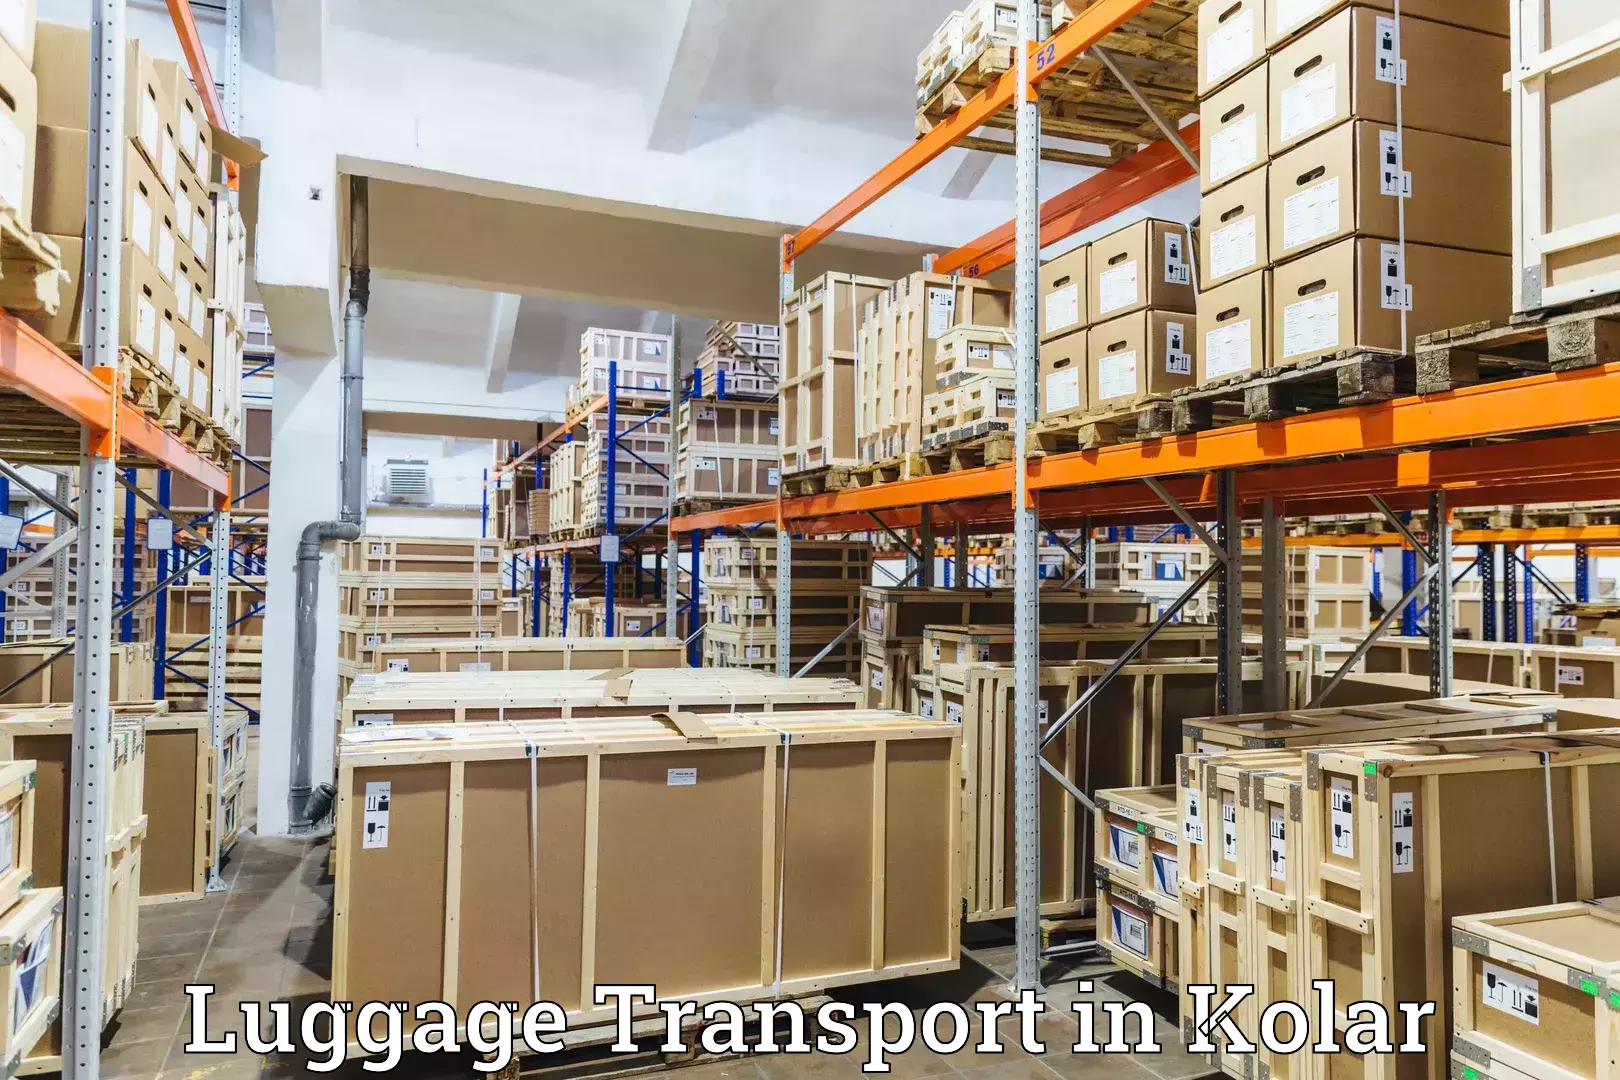 Baggage transport technology in Kolar